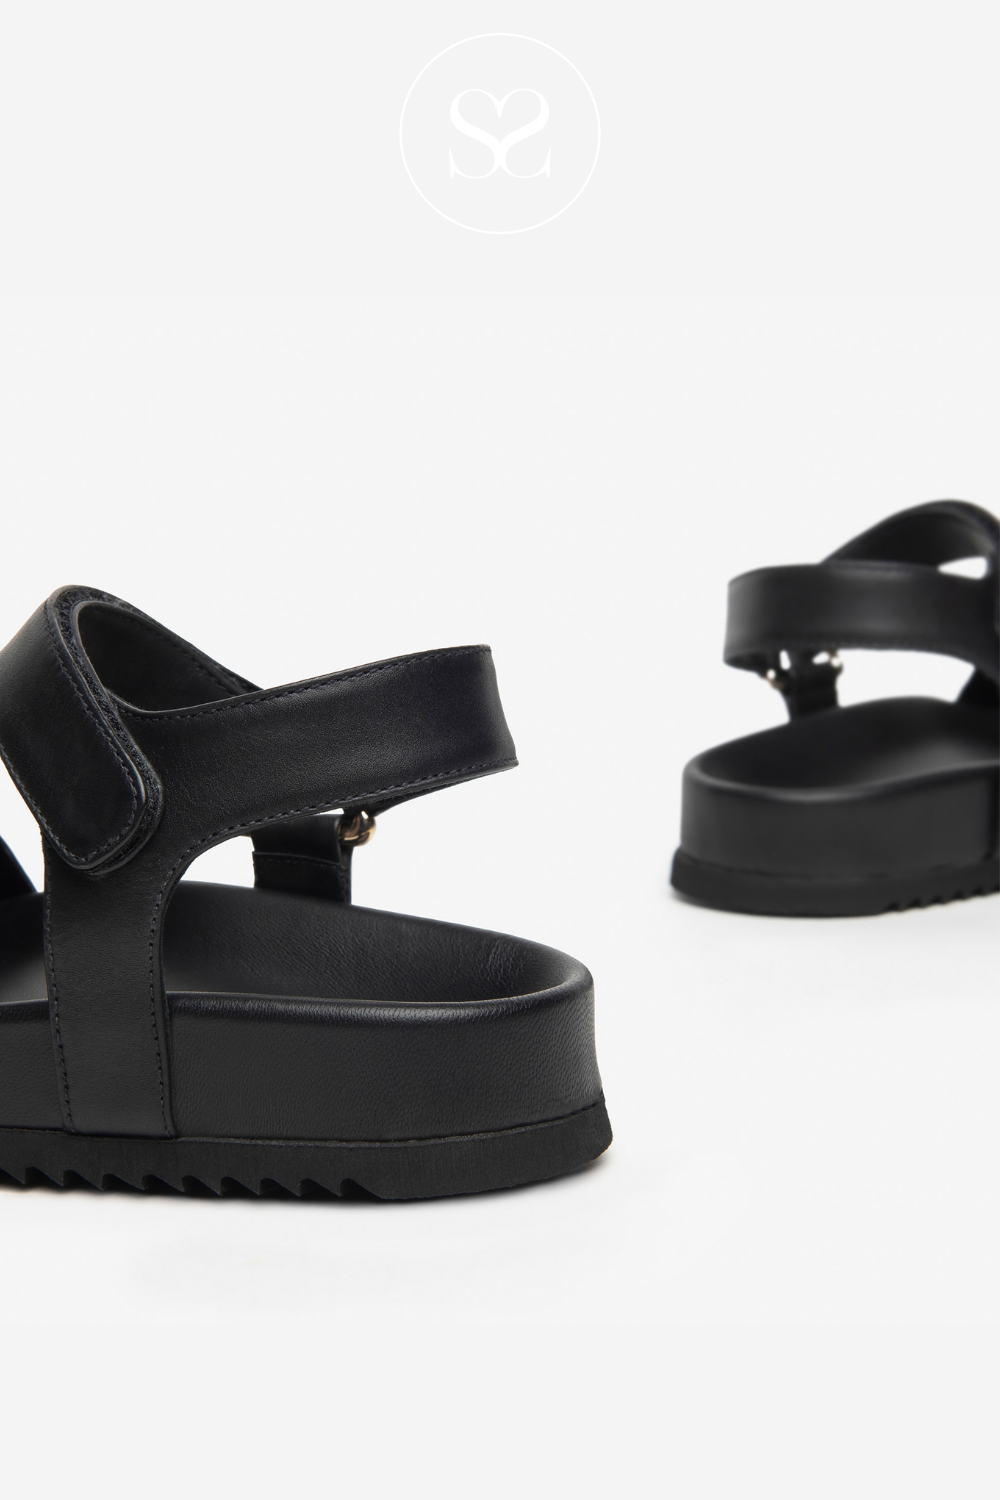 black sandals for Women from Nero Giardini Ireland